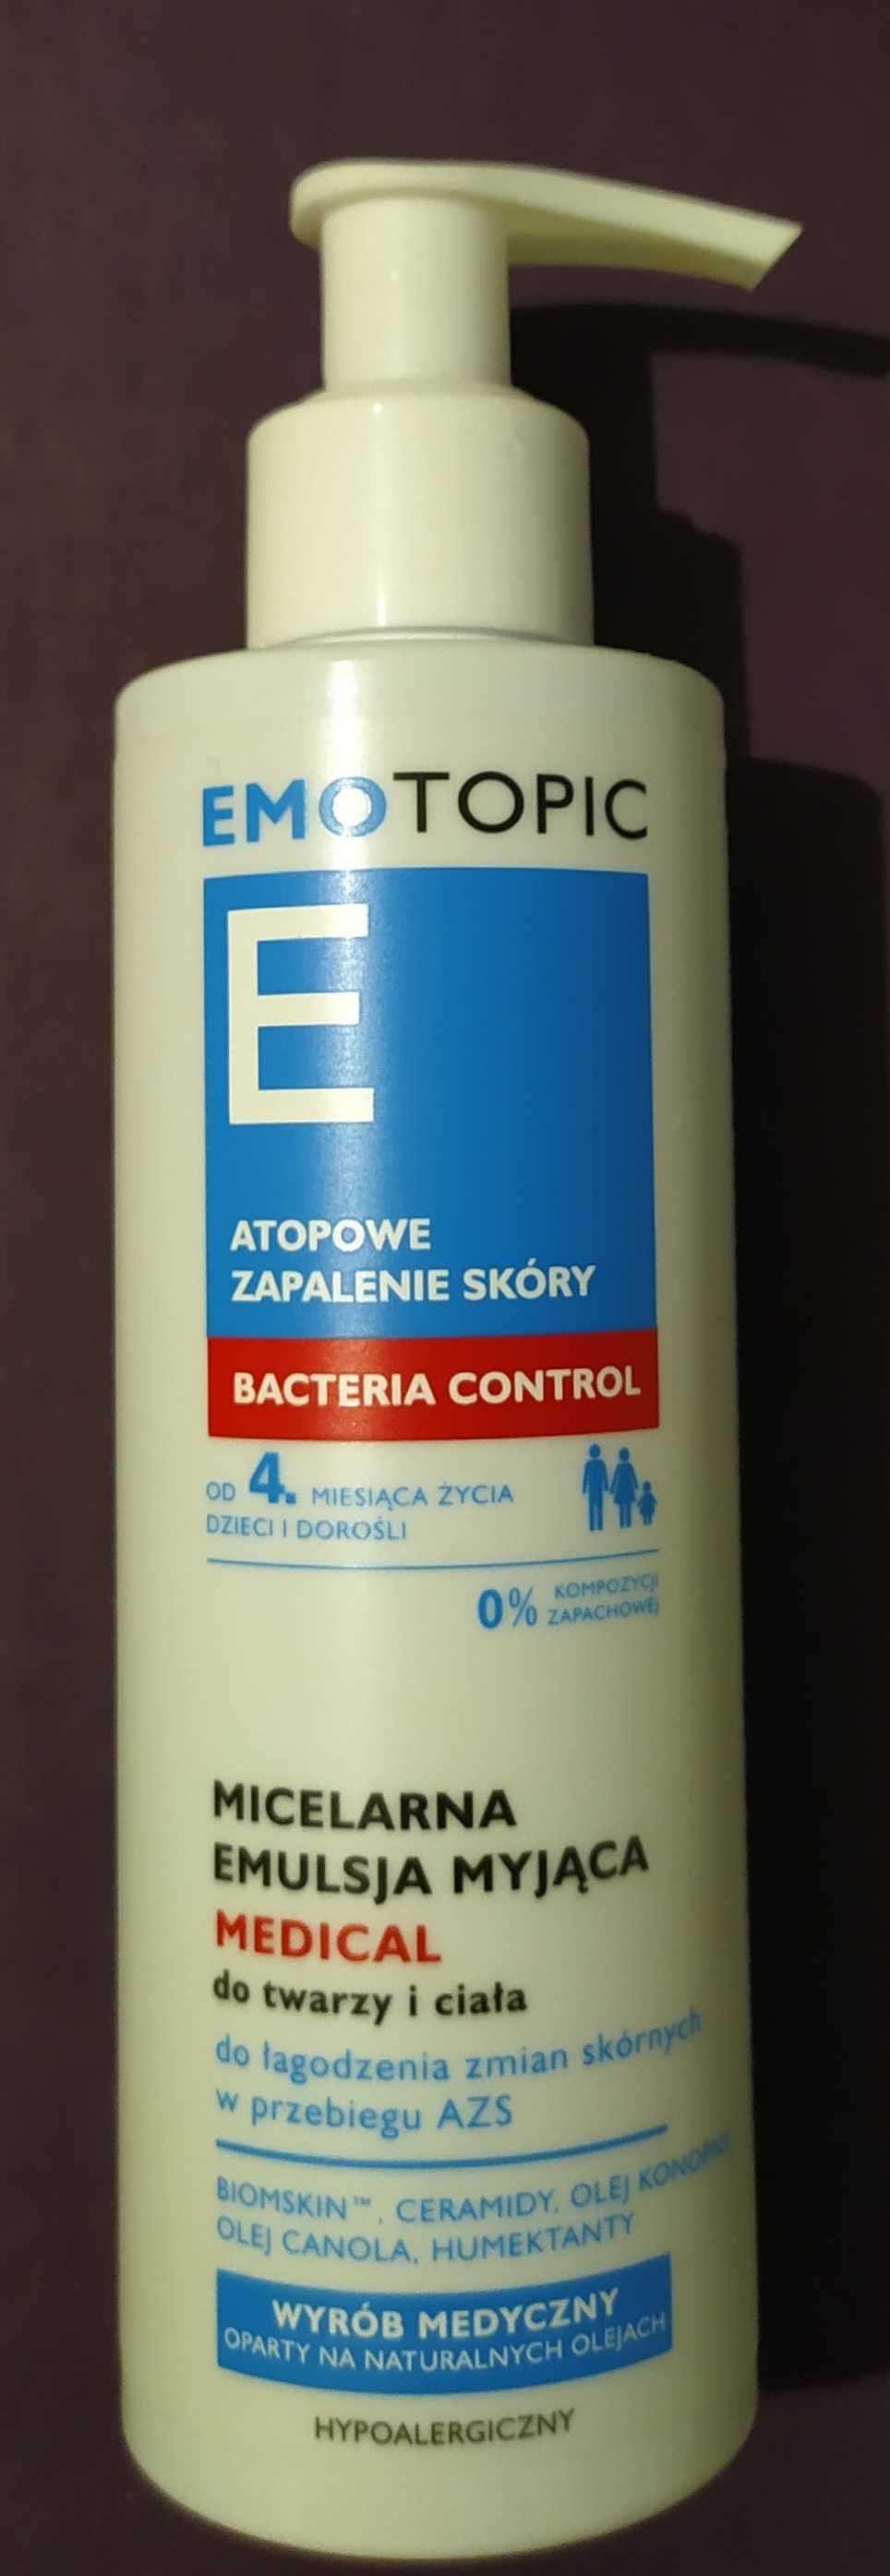 EMOTOPIC BACTERIA CONTROL micelarna emulsja myjąca